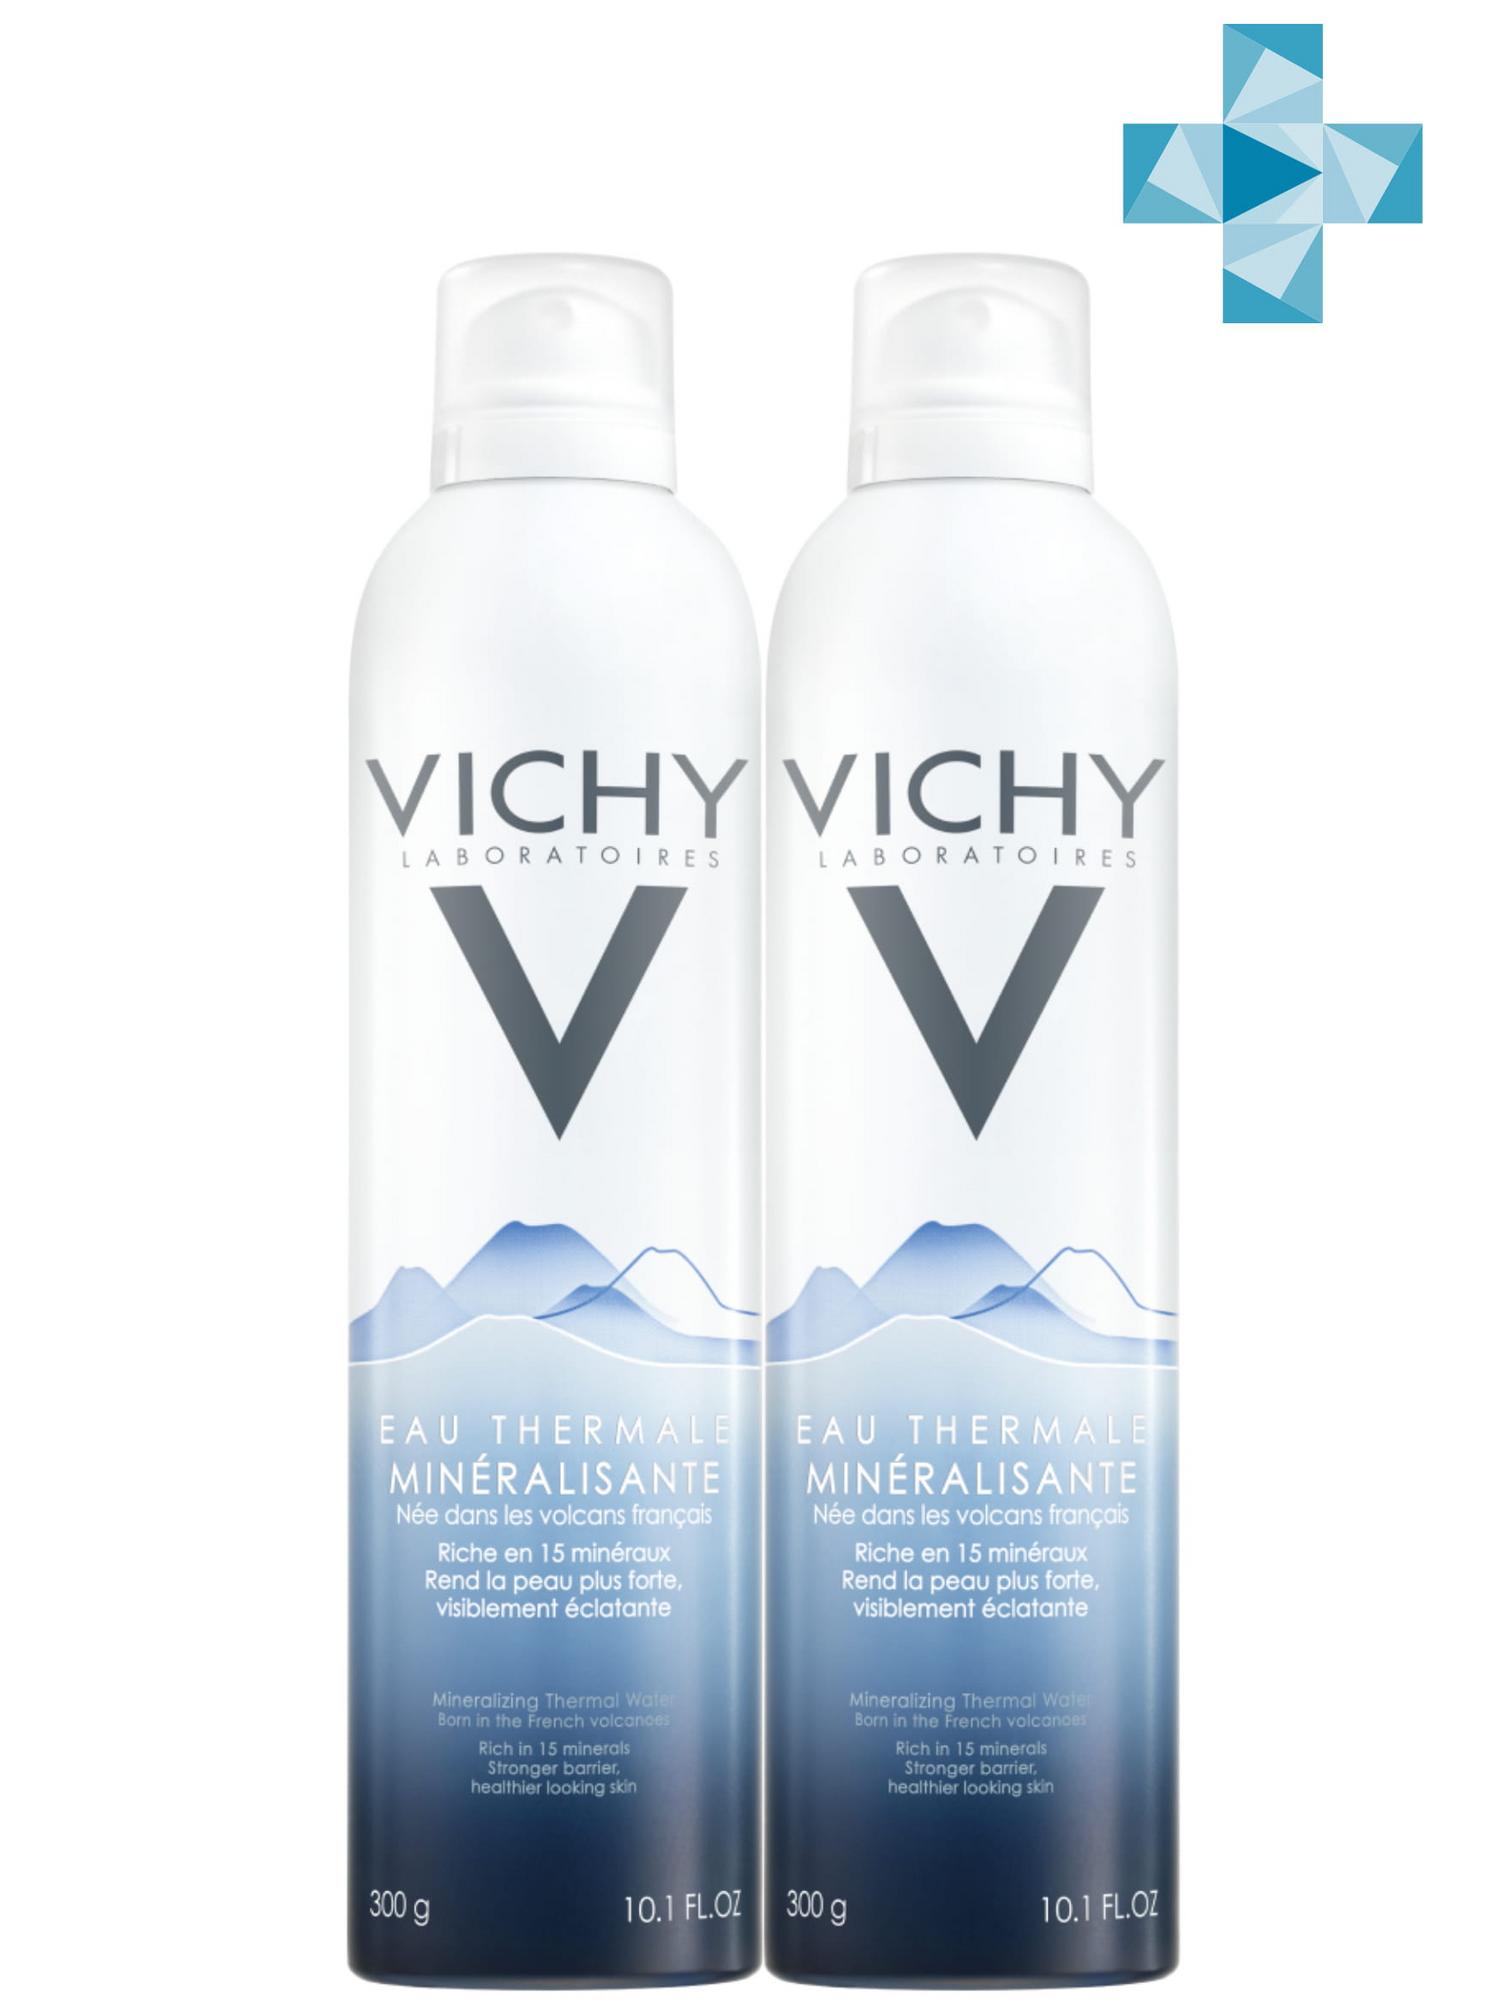 Vichy Комплект Вулканическая термальная вода, 2 х 300 мл (Vichy, Thermal Water Vichy)